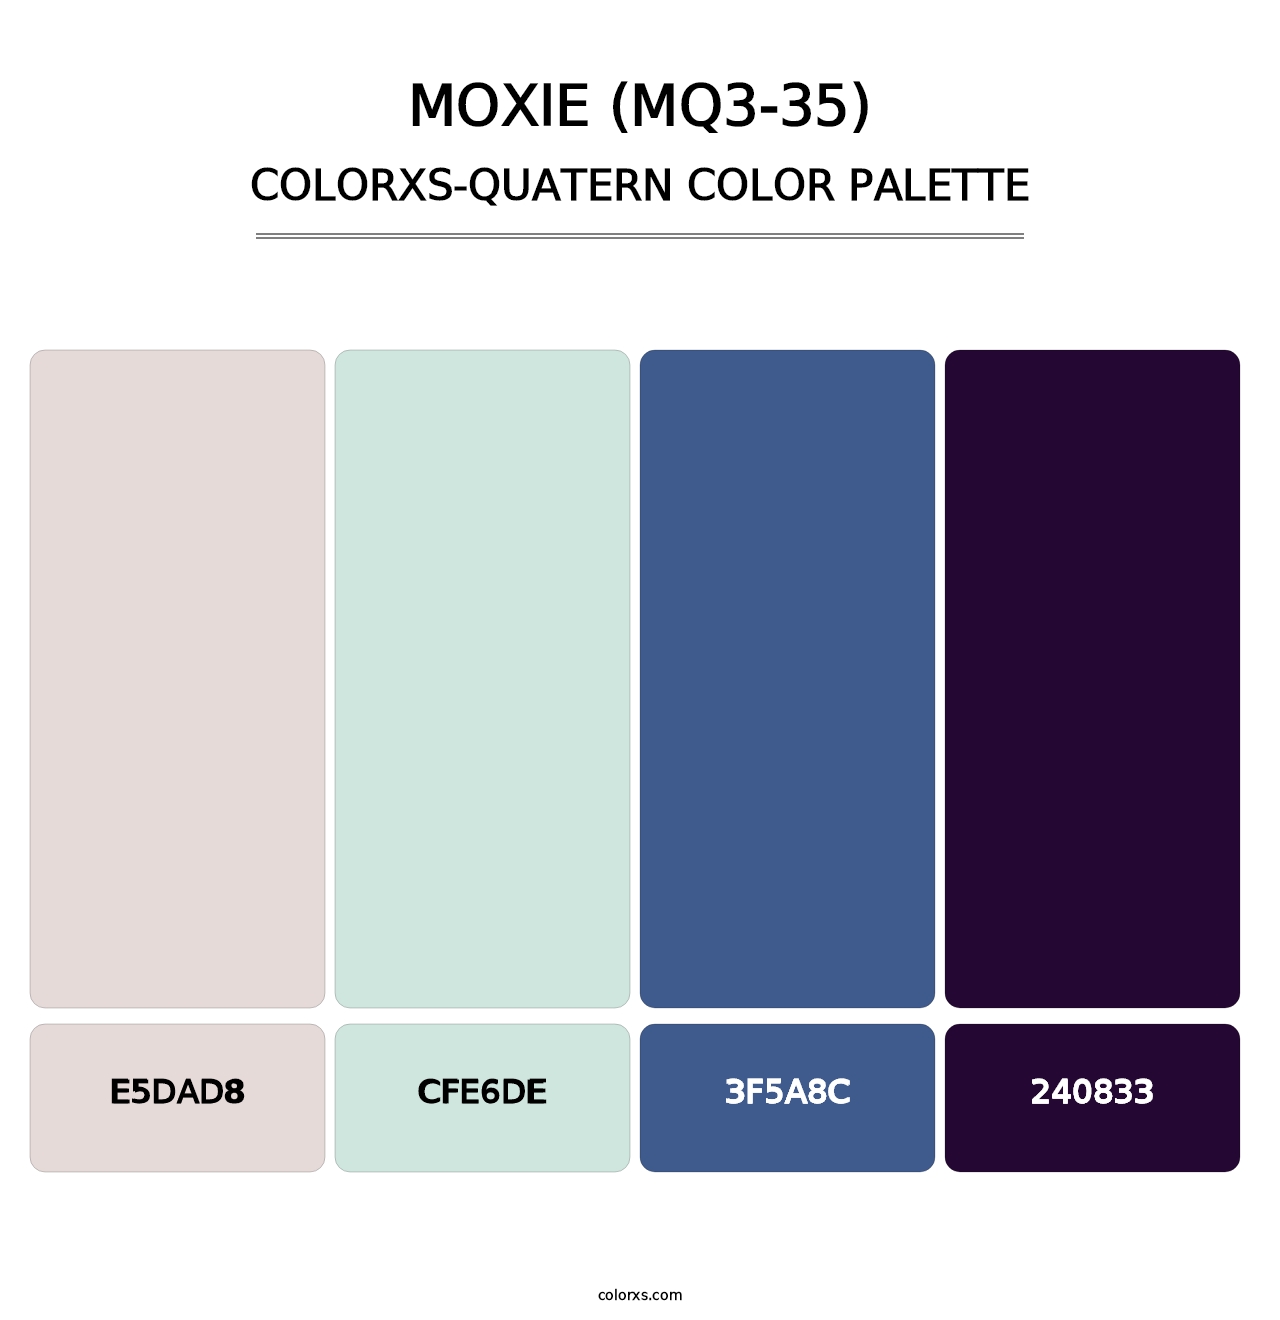 Moxie (MQ3-35) - Colorxs Quatern Palette